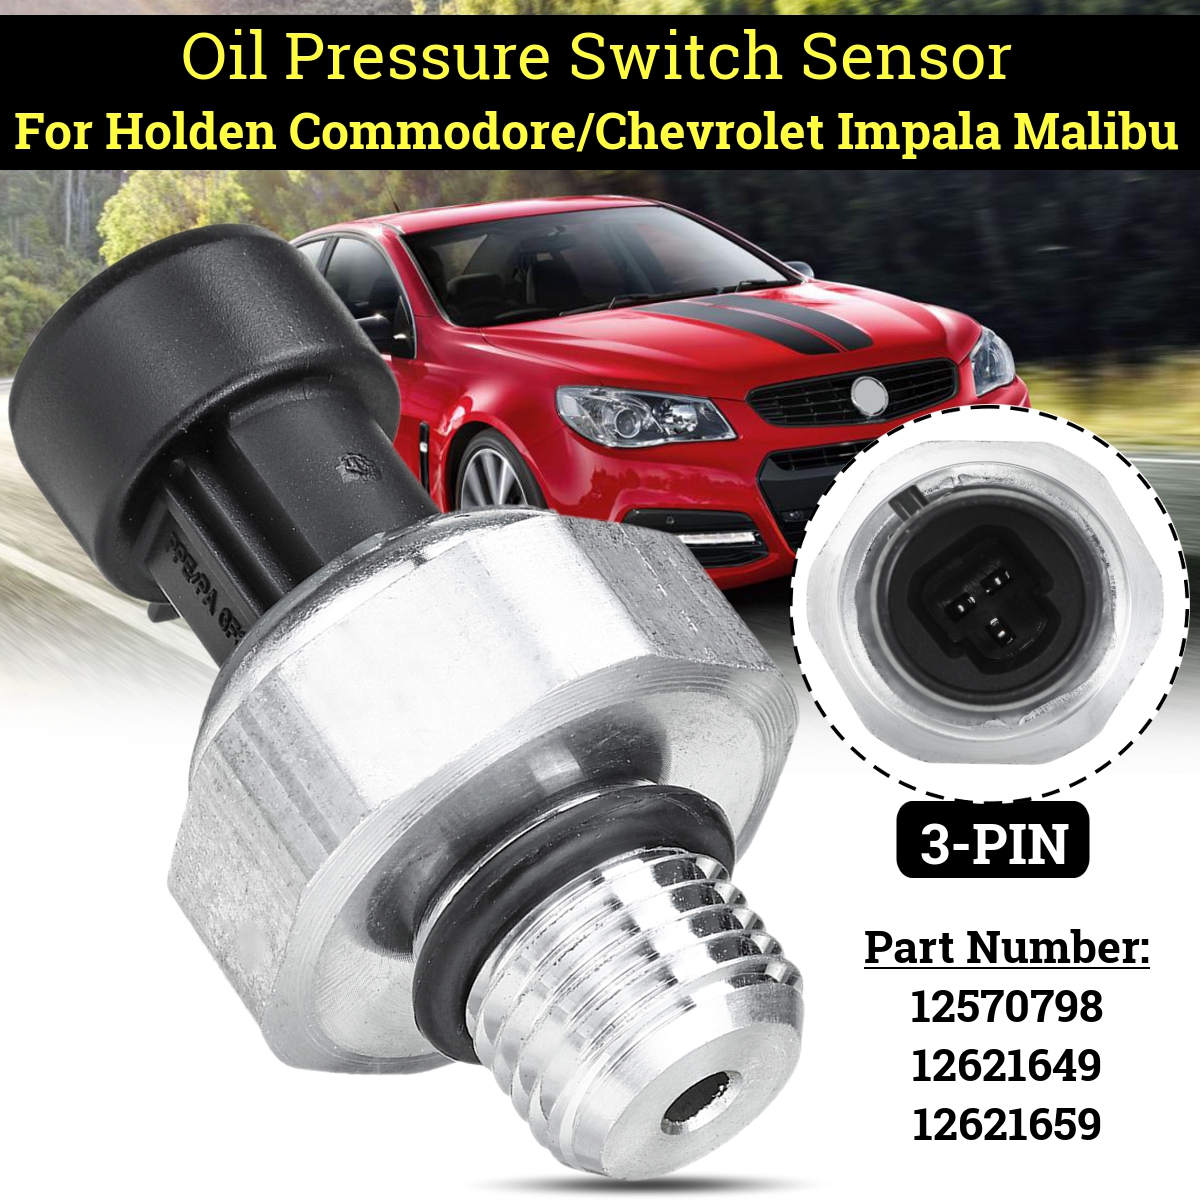 Oil-Pressure-Switch-Sensor-For-Holden-CommodoreChevrolet-Impala-Malibu-1671377-1